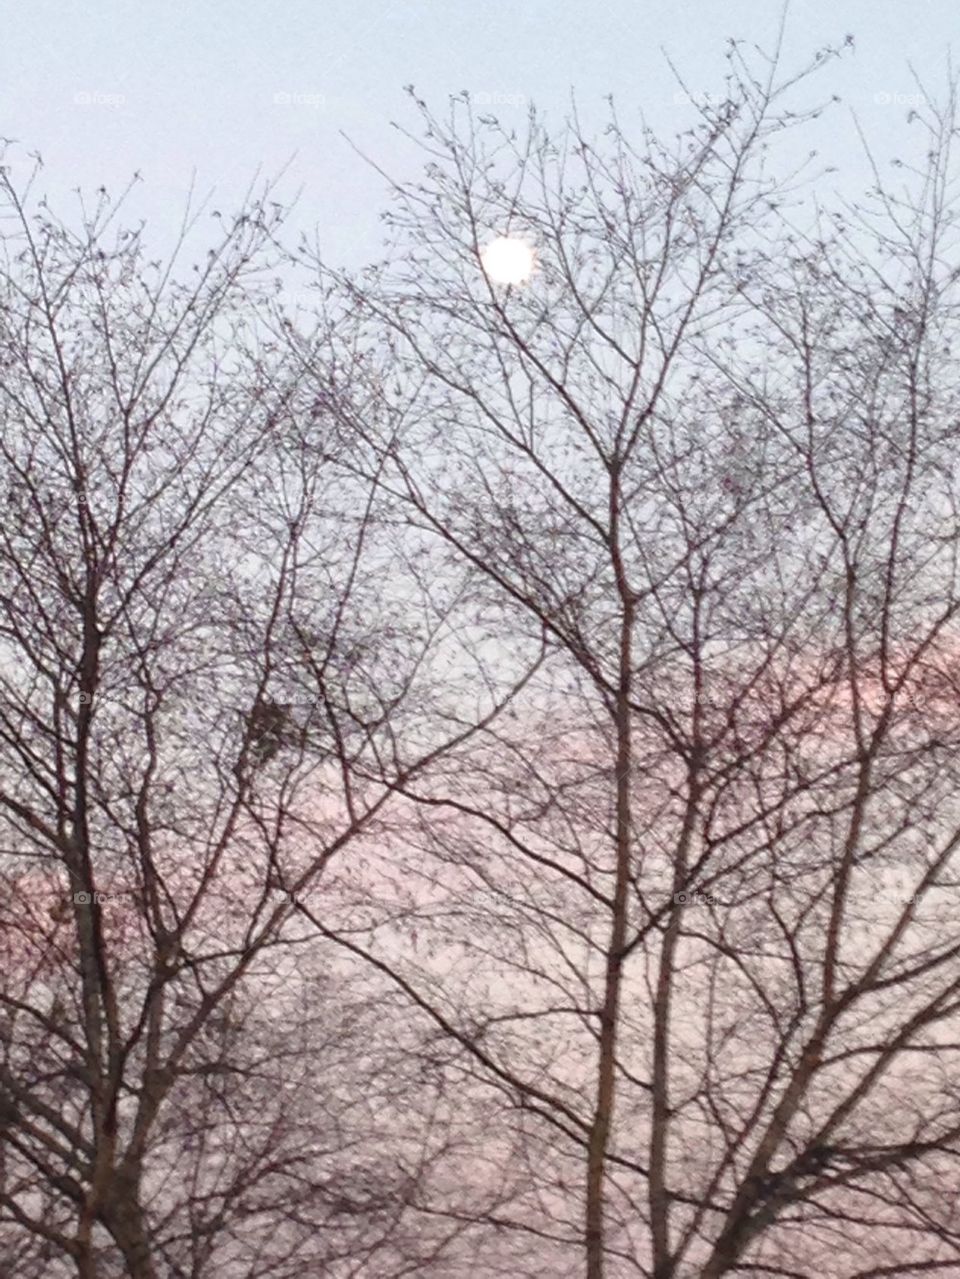 Full moon through tree